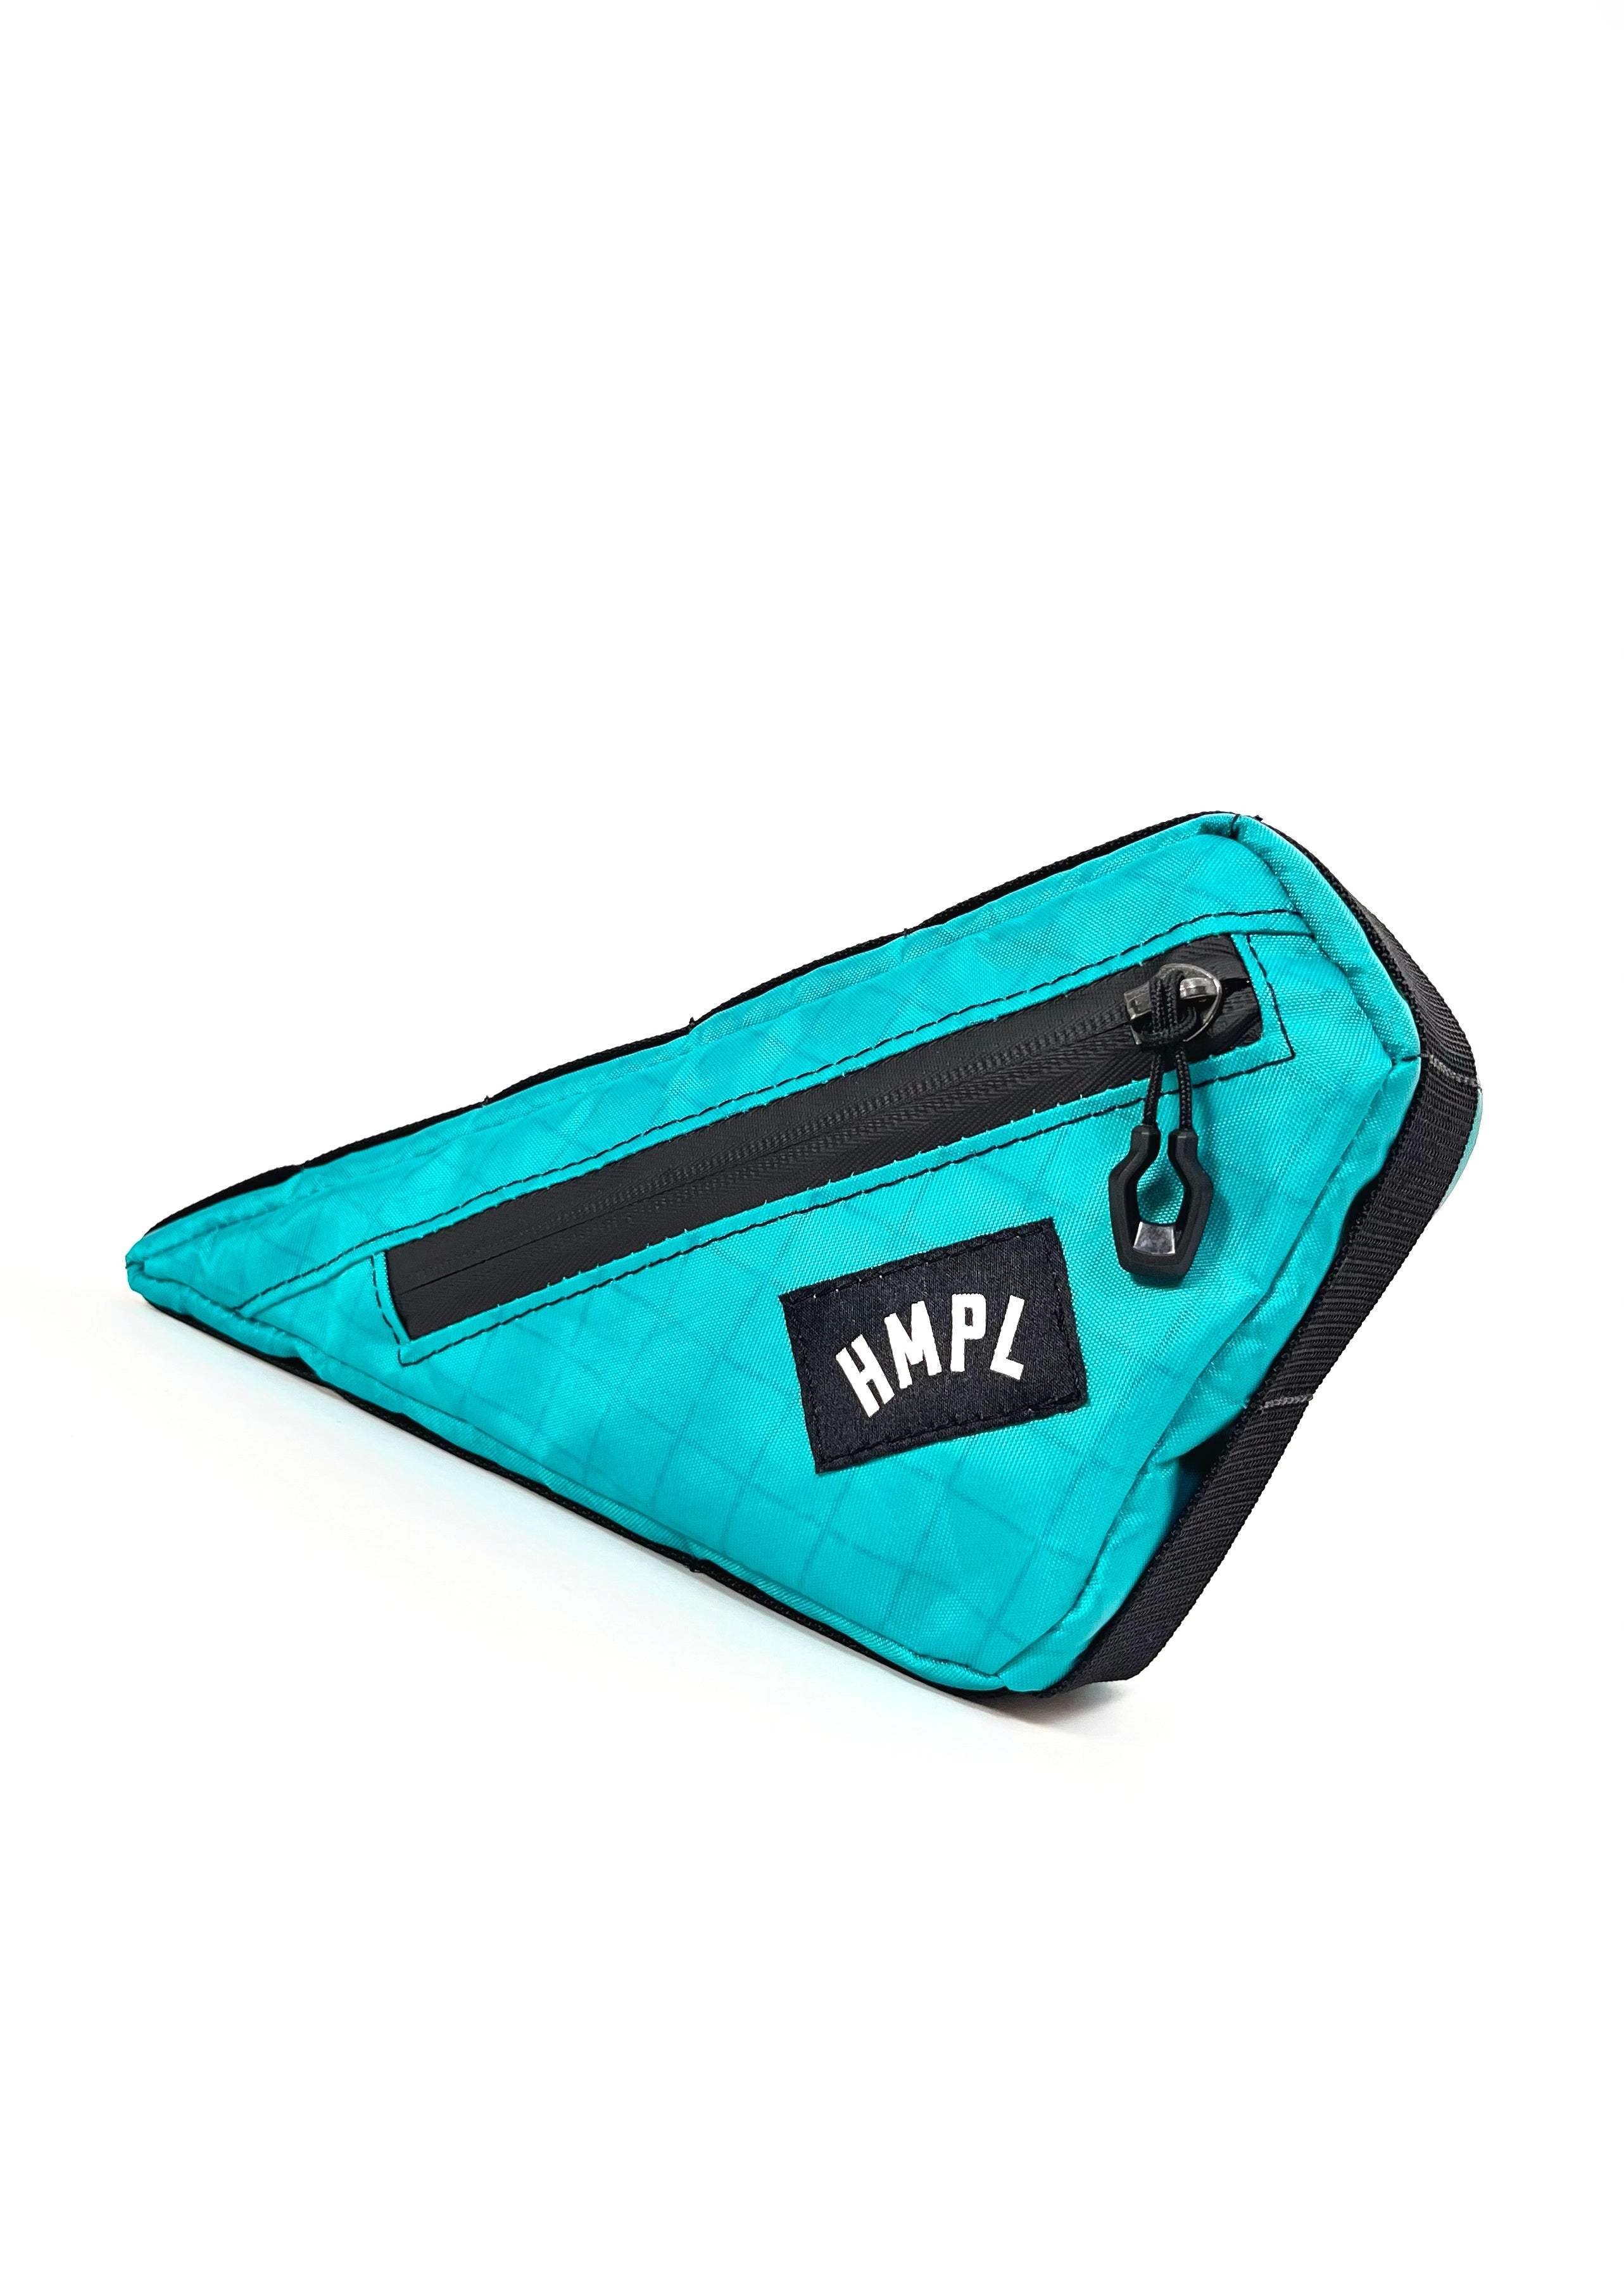 HMPL Mini Frame Bag